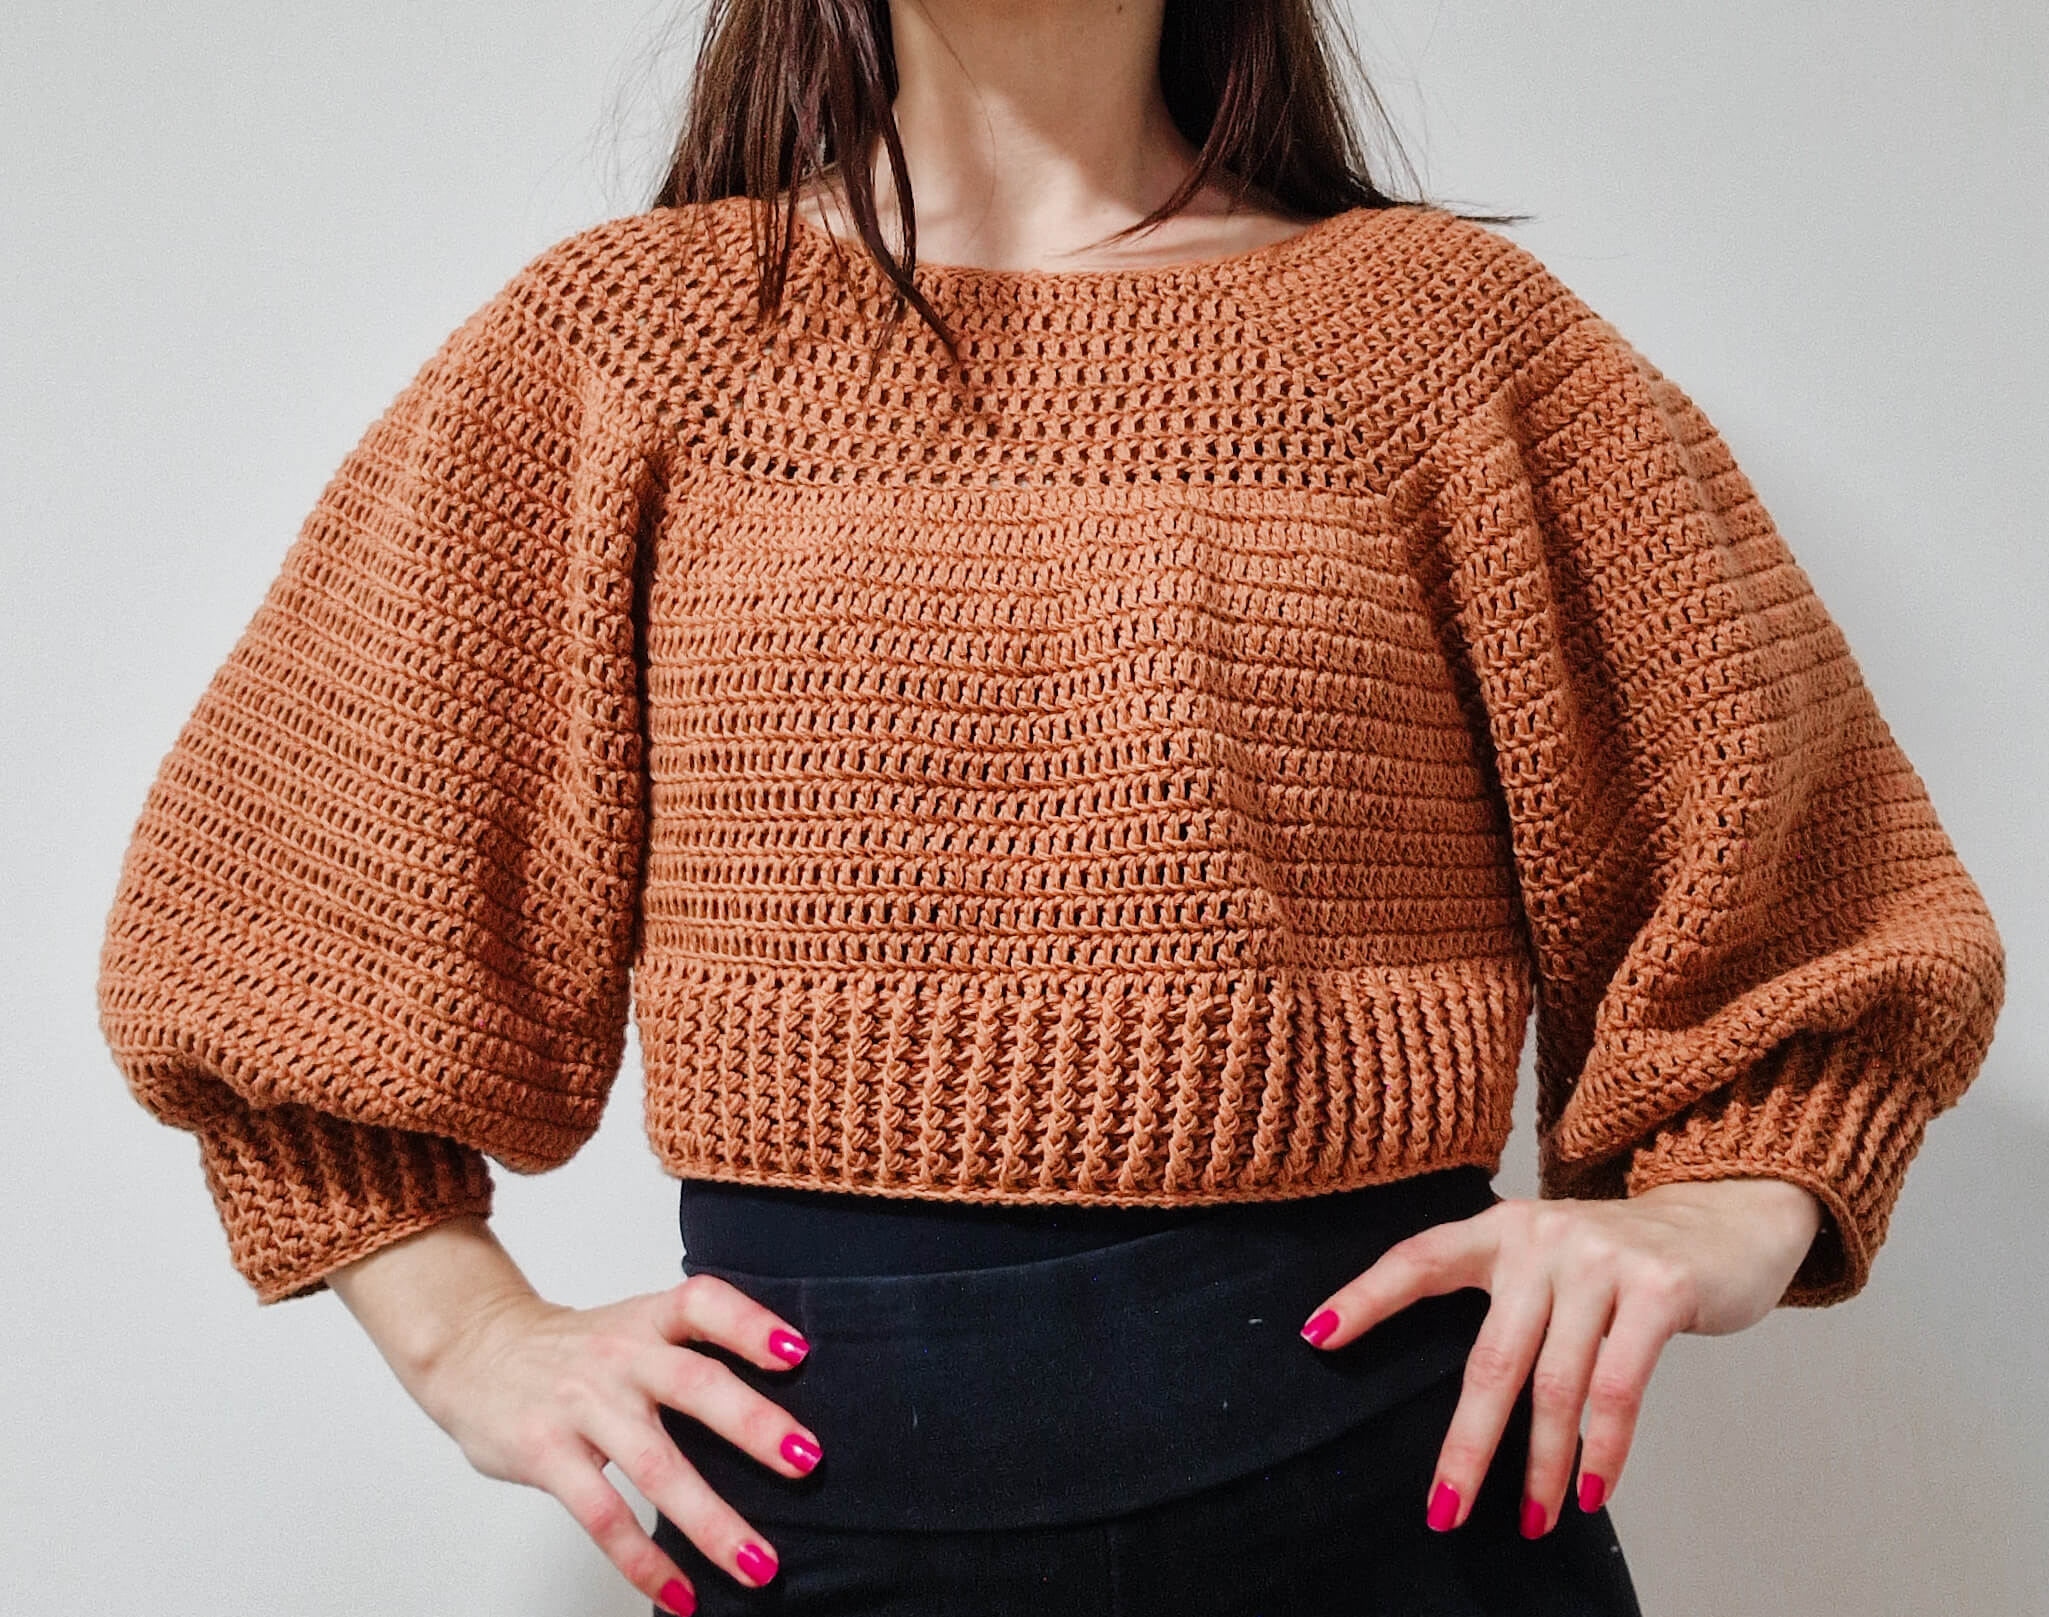 How to Crochet a Double Crochet Crop Raglan Sweater